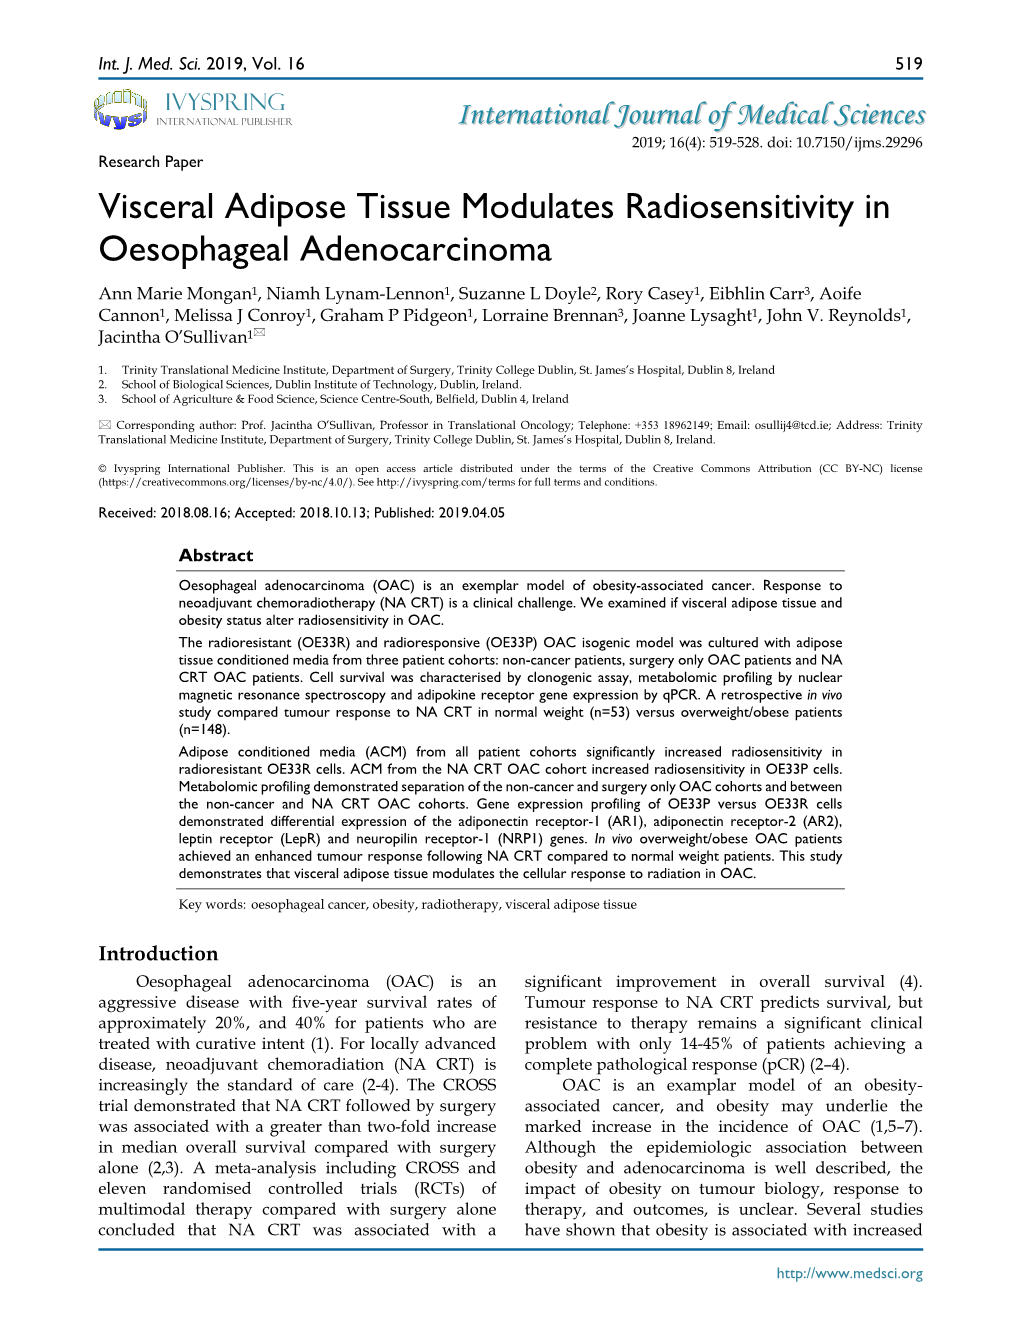 Visceral Adipose Tissue Modulates Radiosensitivity in Oesophageal